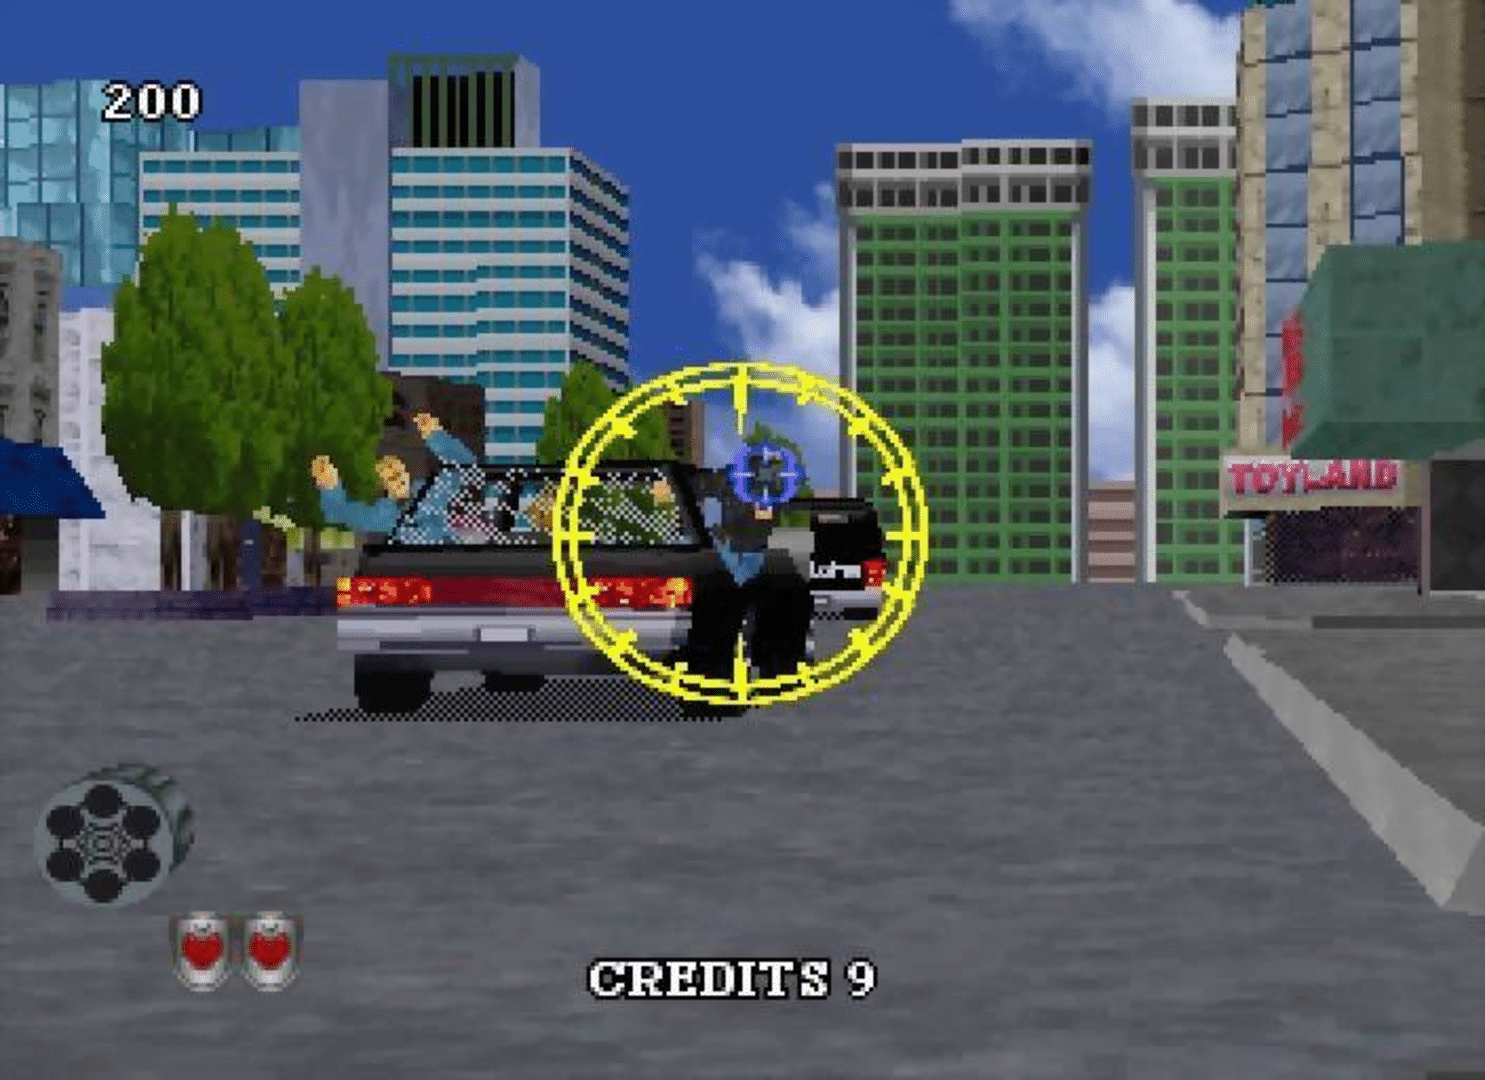 Virtua Cop 2 screenshot